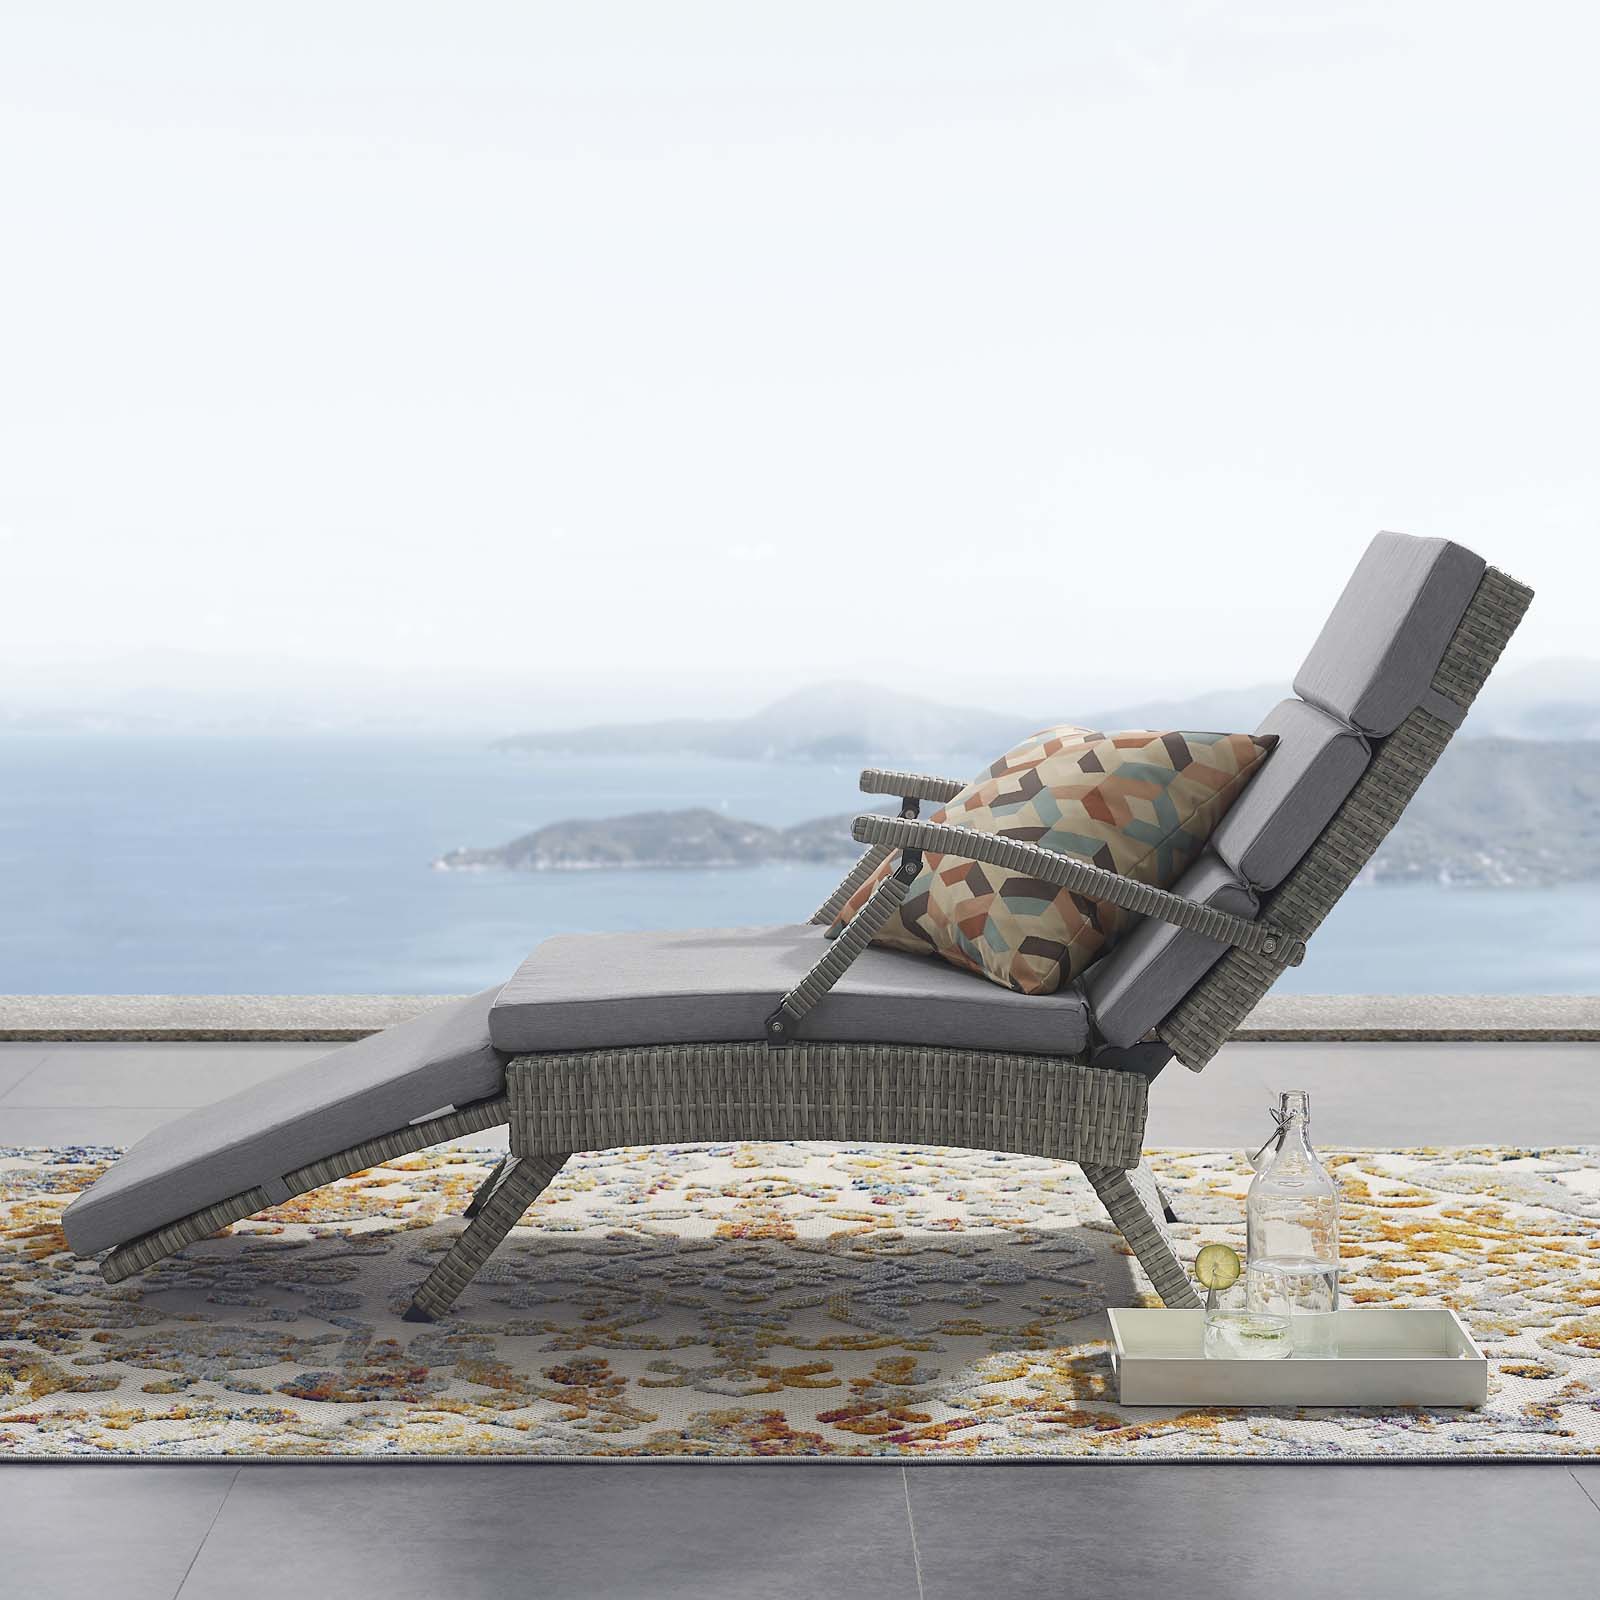 Modern Contemporary Urban Design Outdoor Patio Balcony Garden Furniture Lounge Chair Chaise, Rattan Wicker, Grey Gray - image 2 of 8